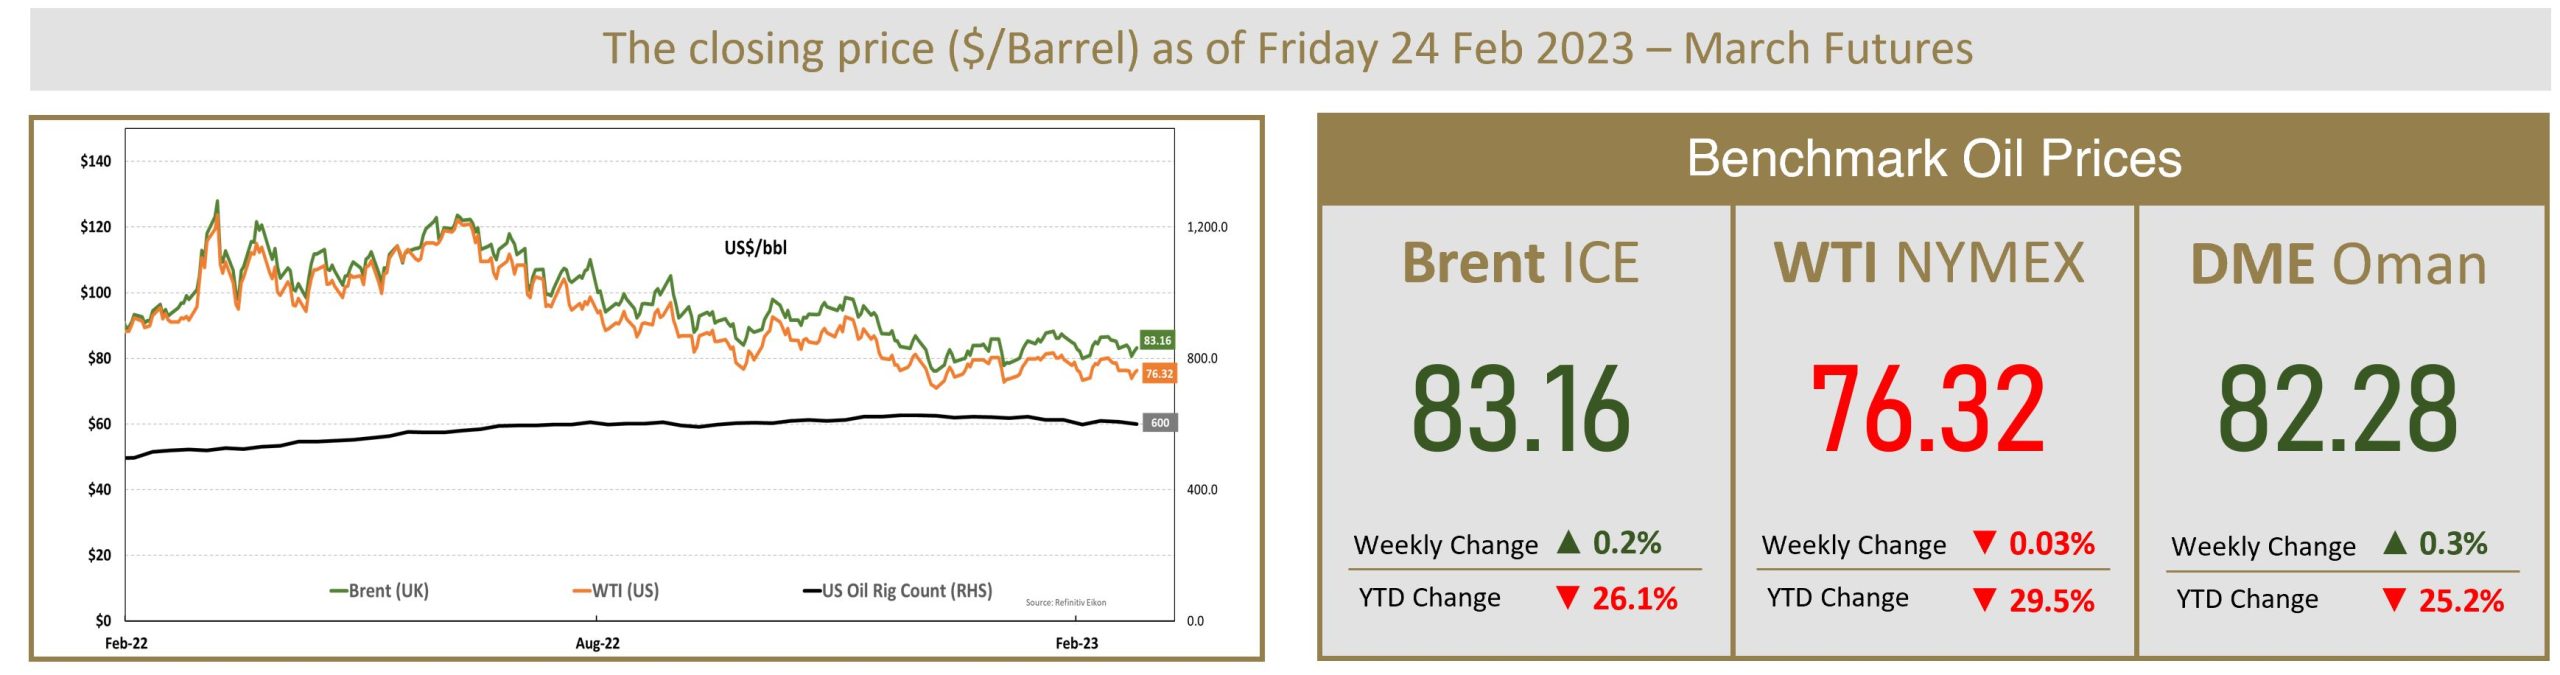 Benchmark Crude Oil Prices 25 Feb